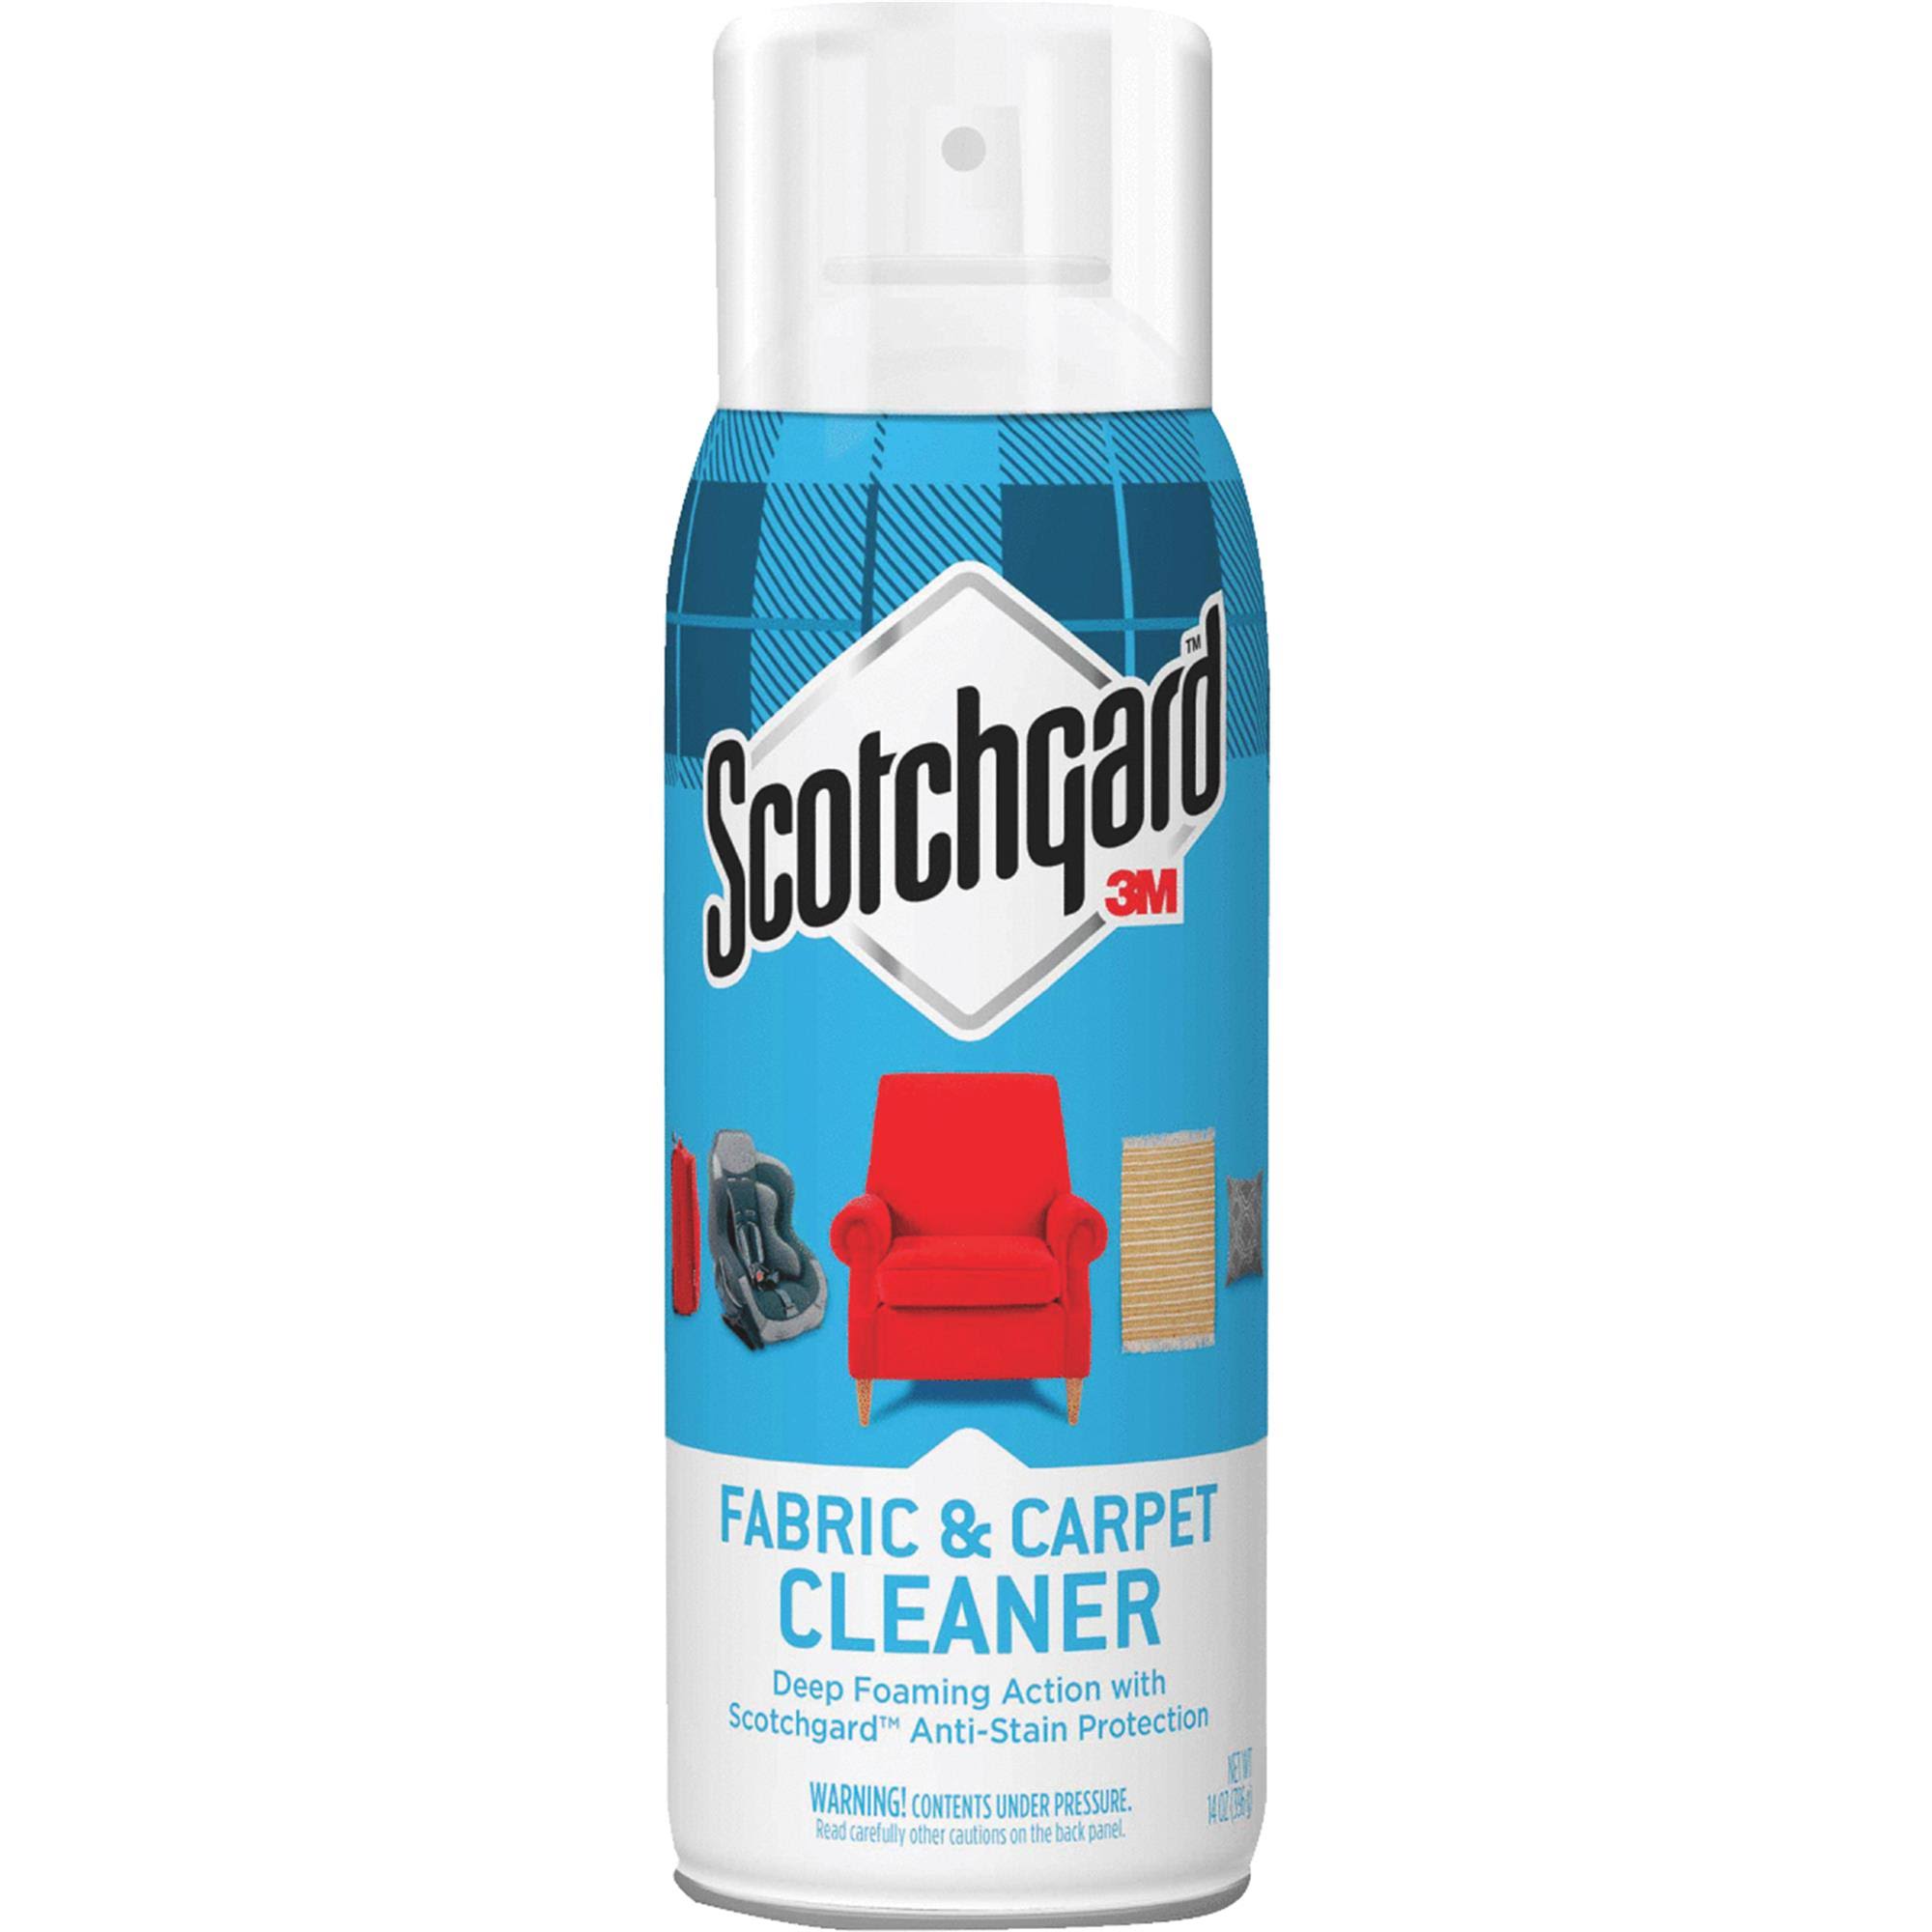 3M Scotchgard Fabric & Carpet Cleaner - 396g